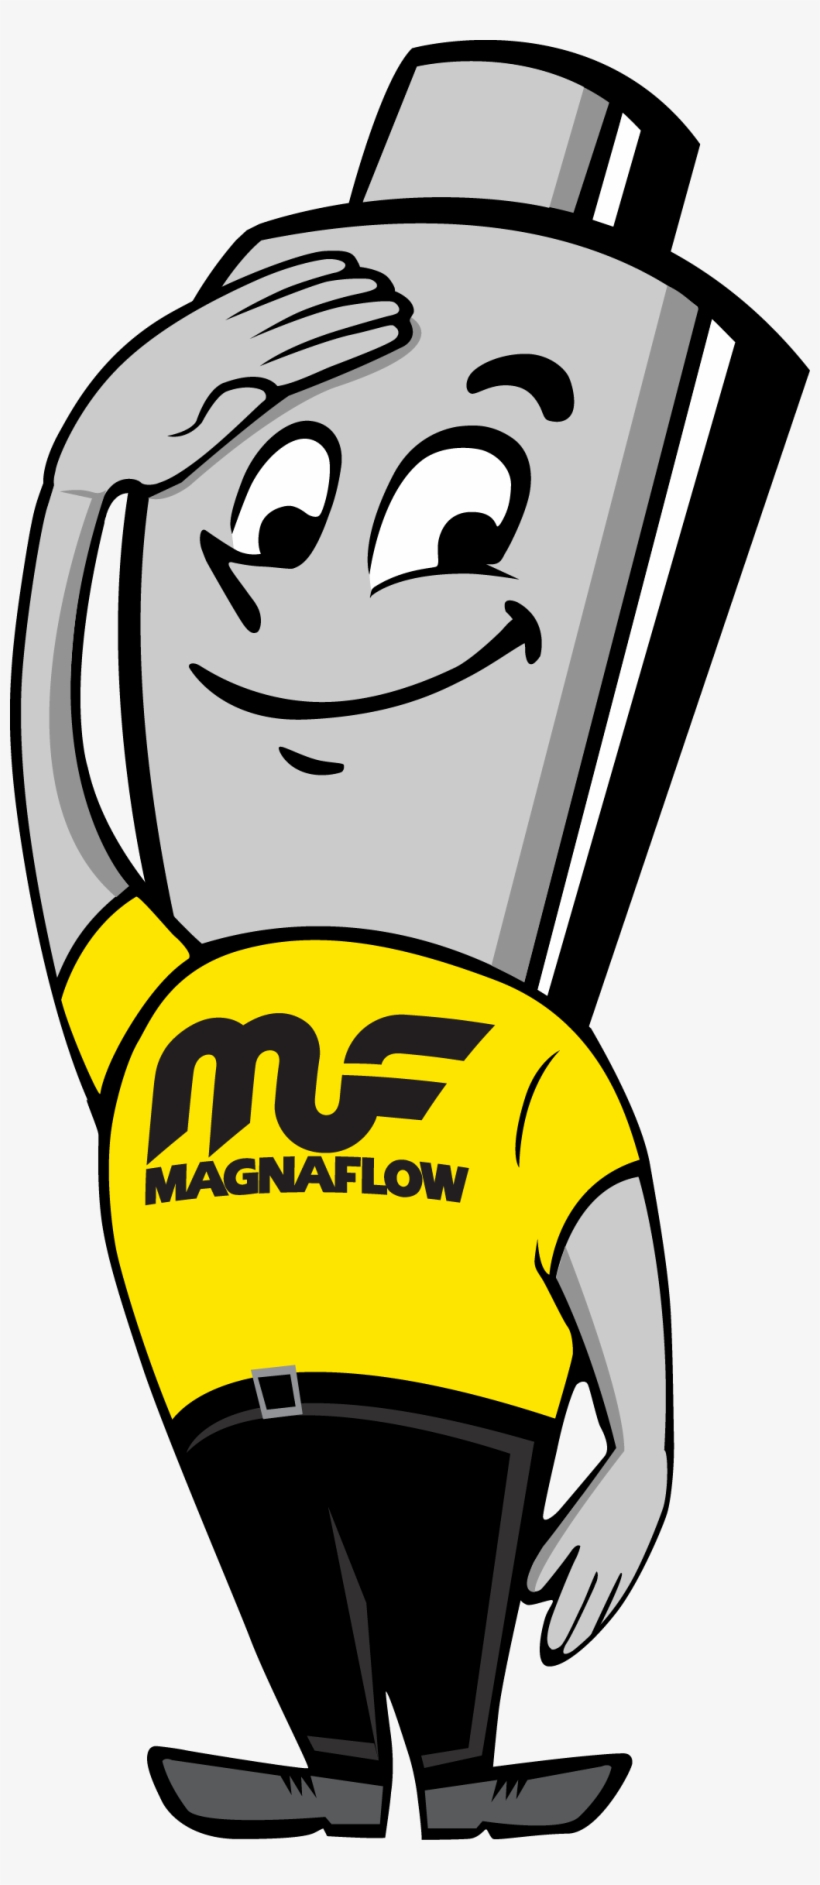 Res - Magnaflow Performance Exhaust, transparent png #944861